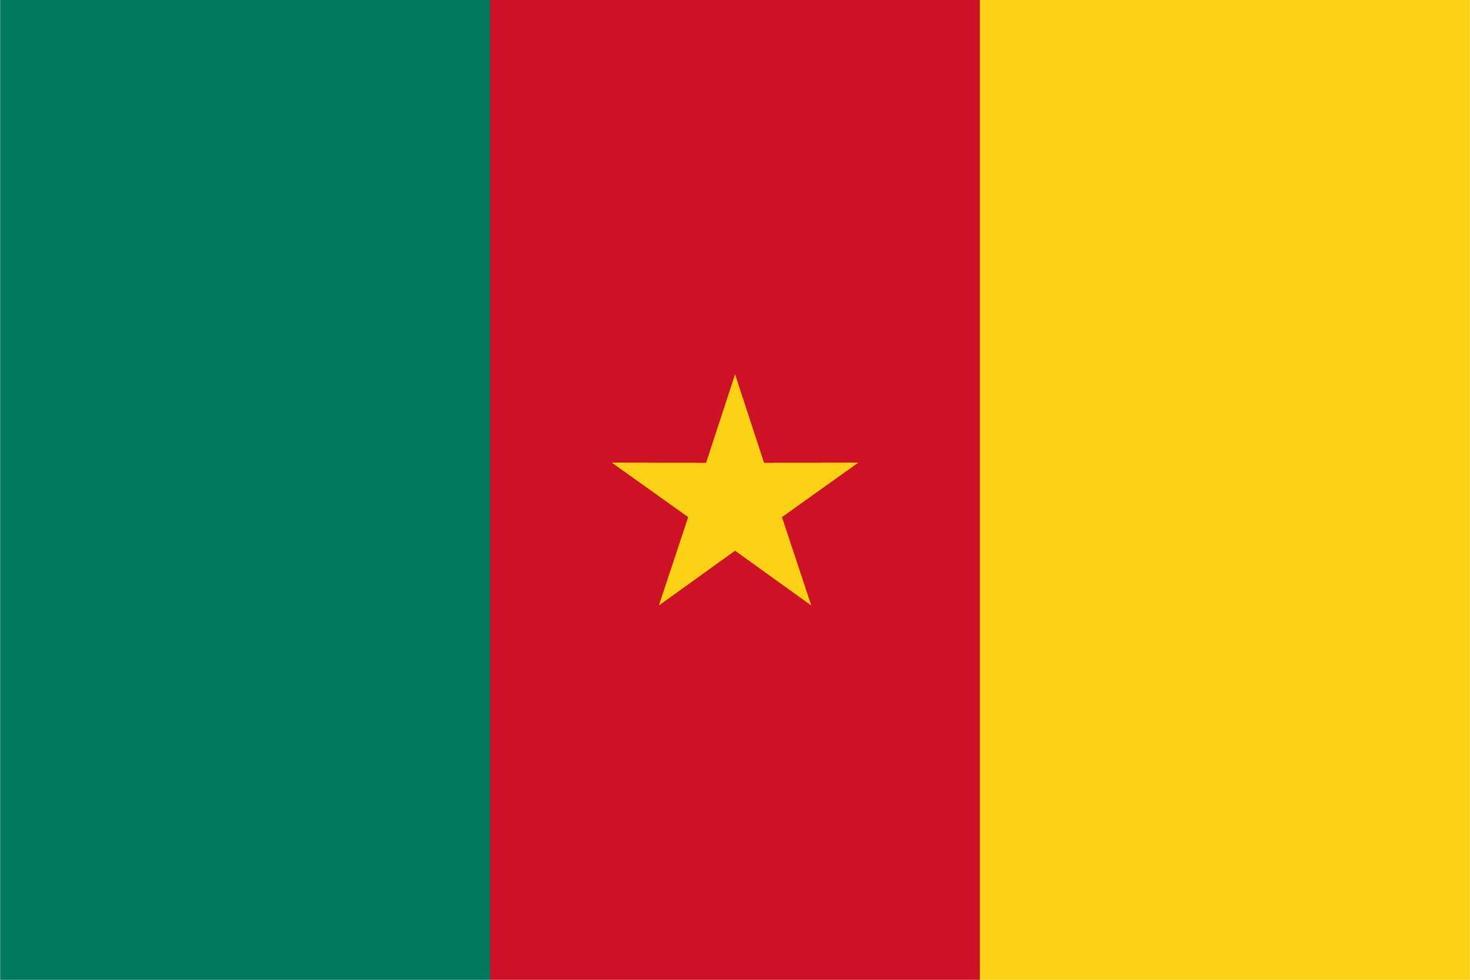 Cameroon flag, flag of Cameroon vector illustration